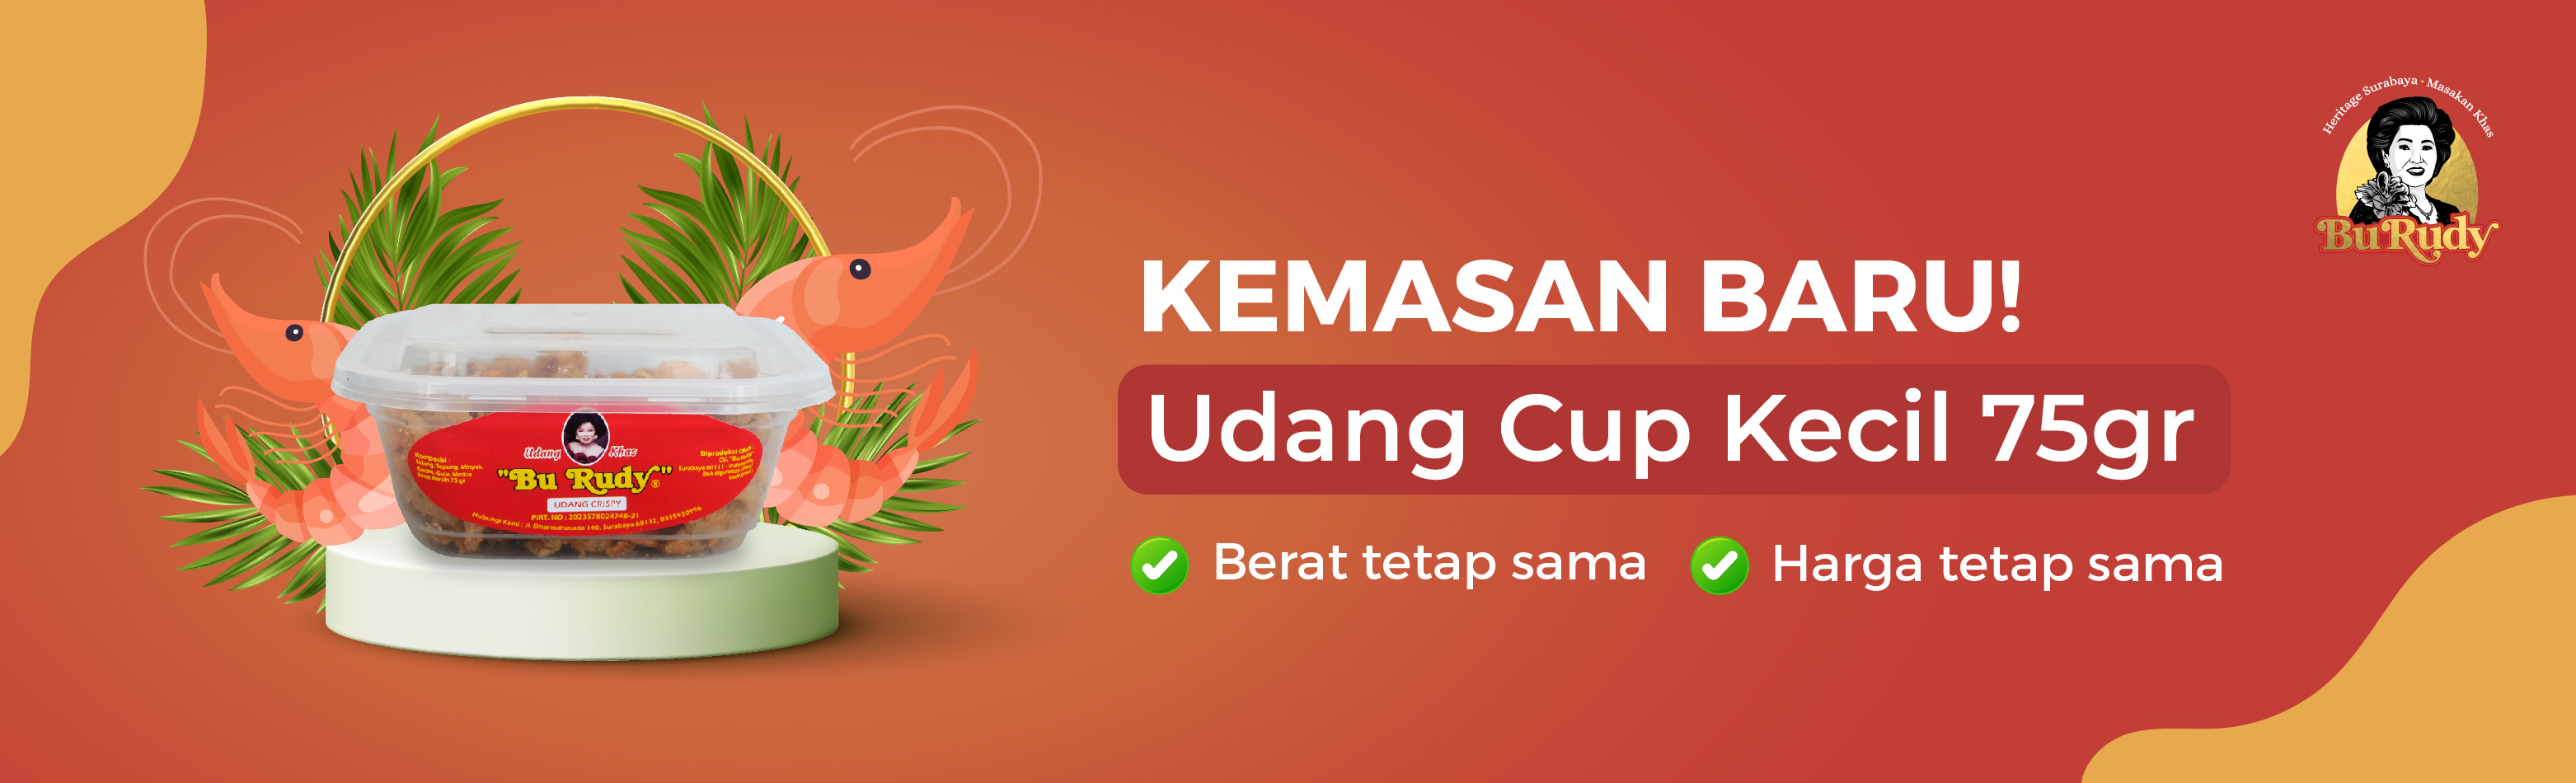 banner burudy website_udang cup.jpg